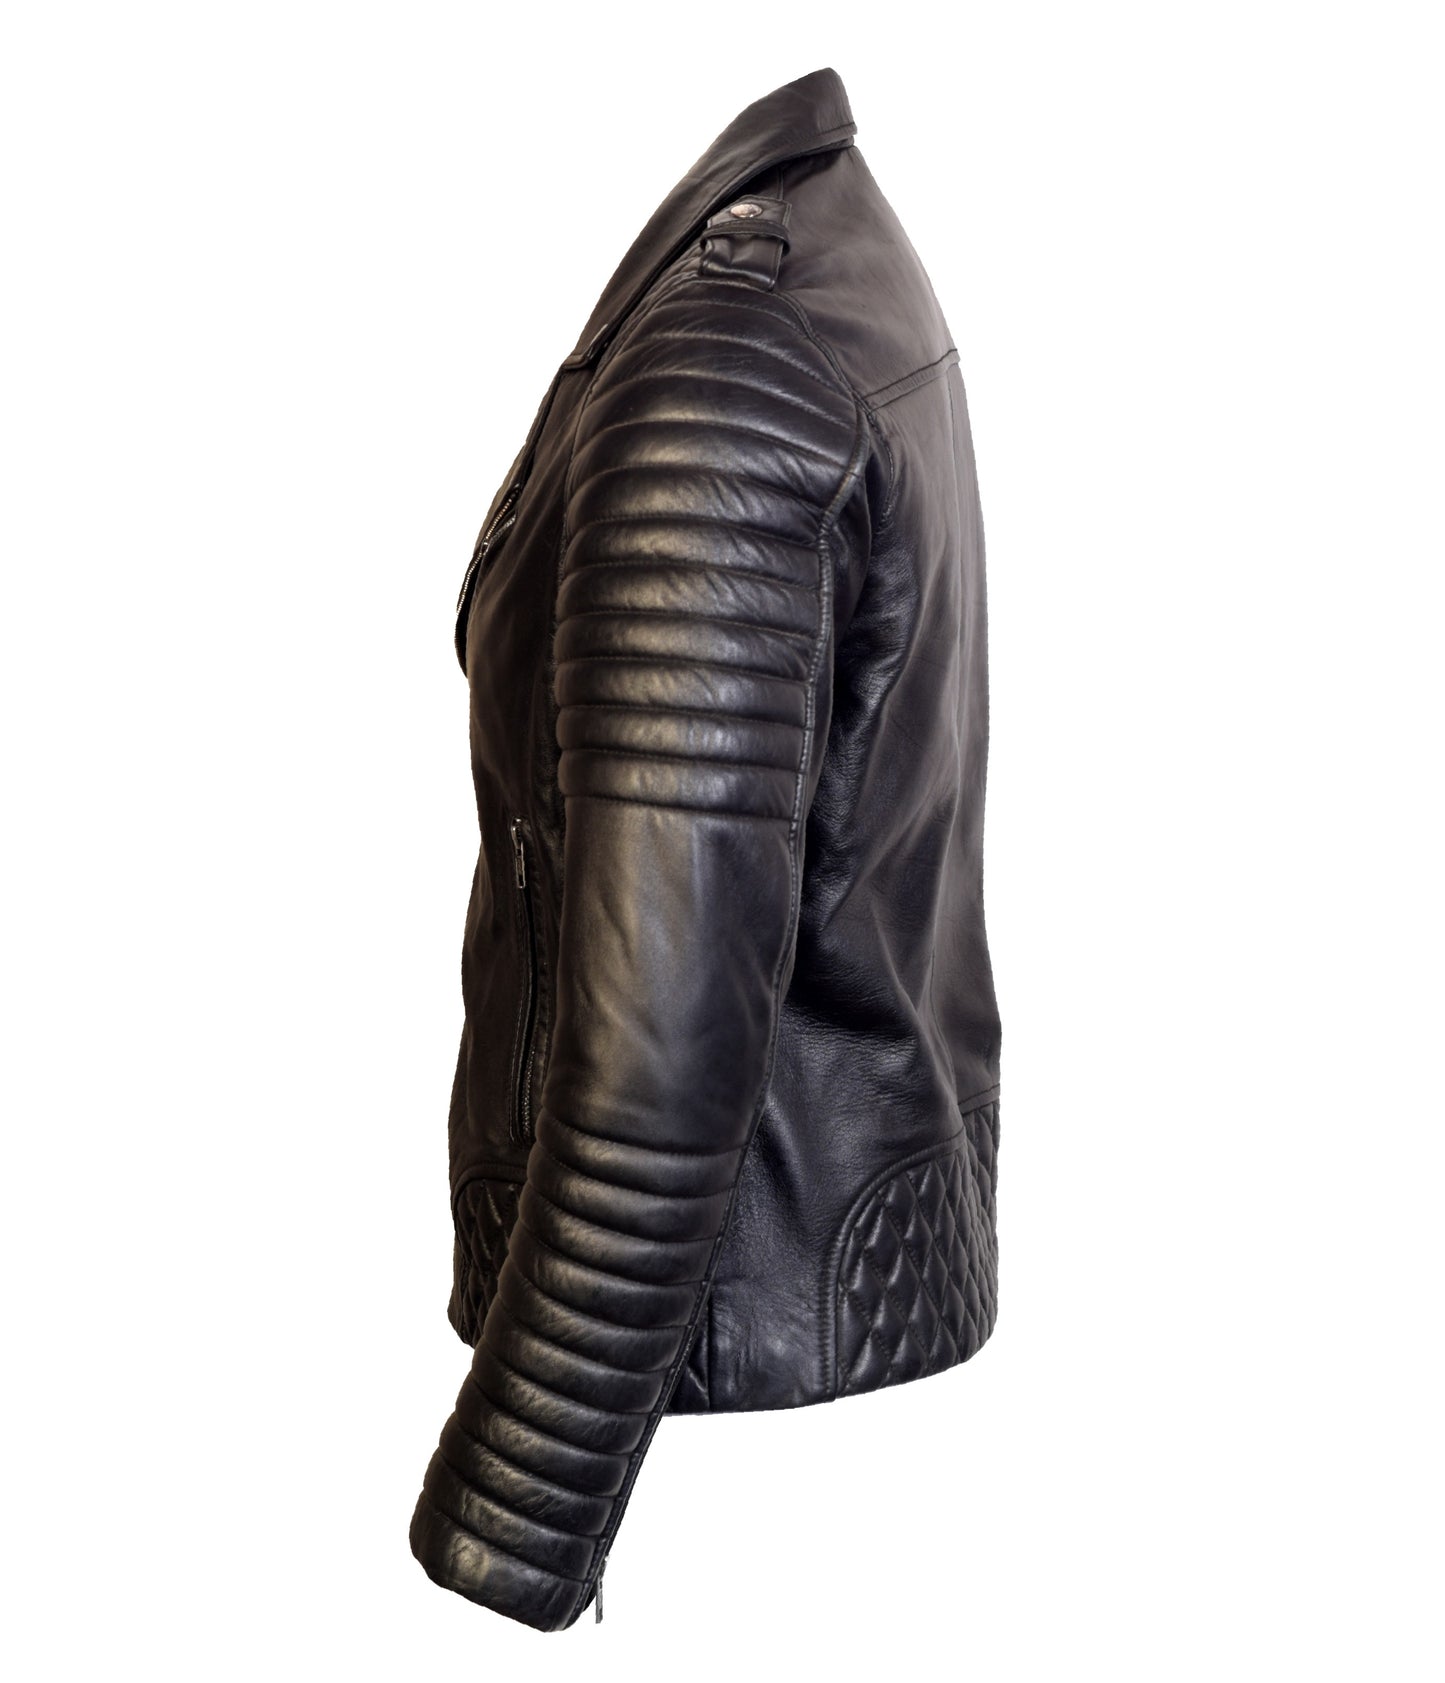 Buy Best Black Leather Jacket